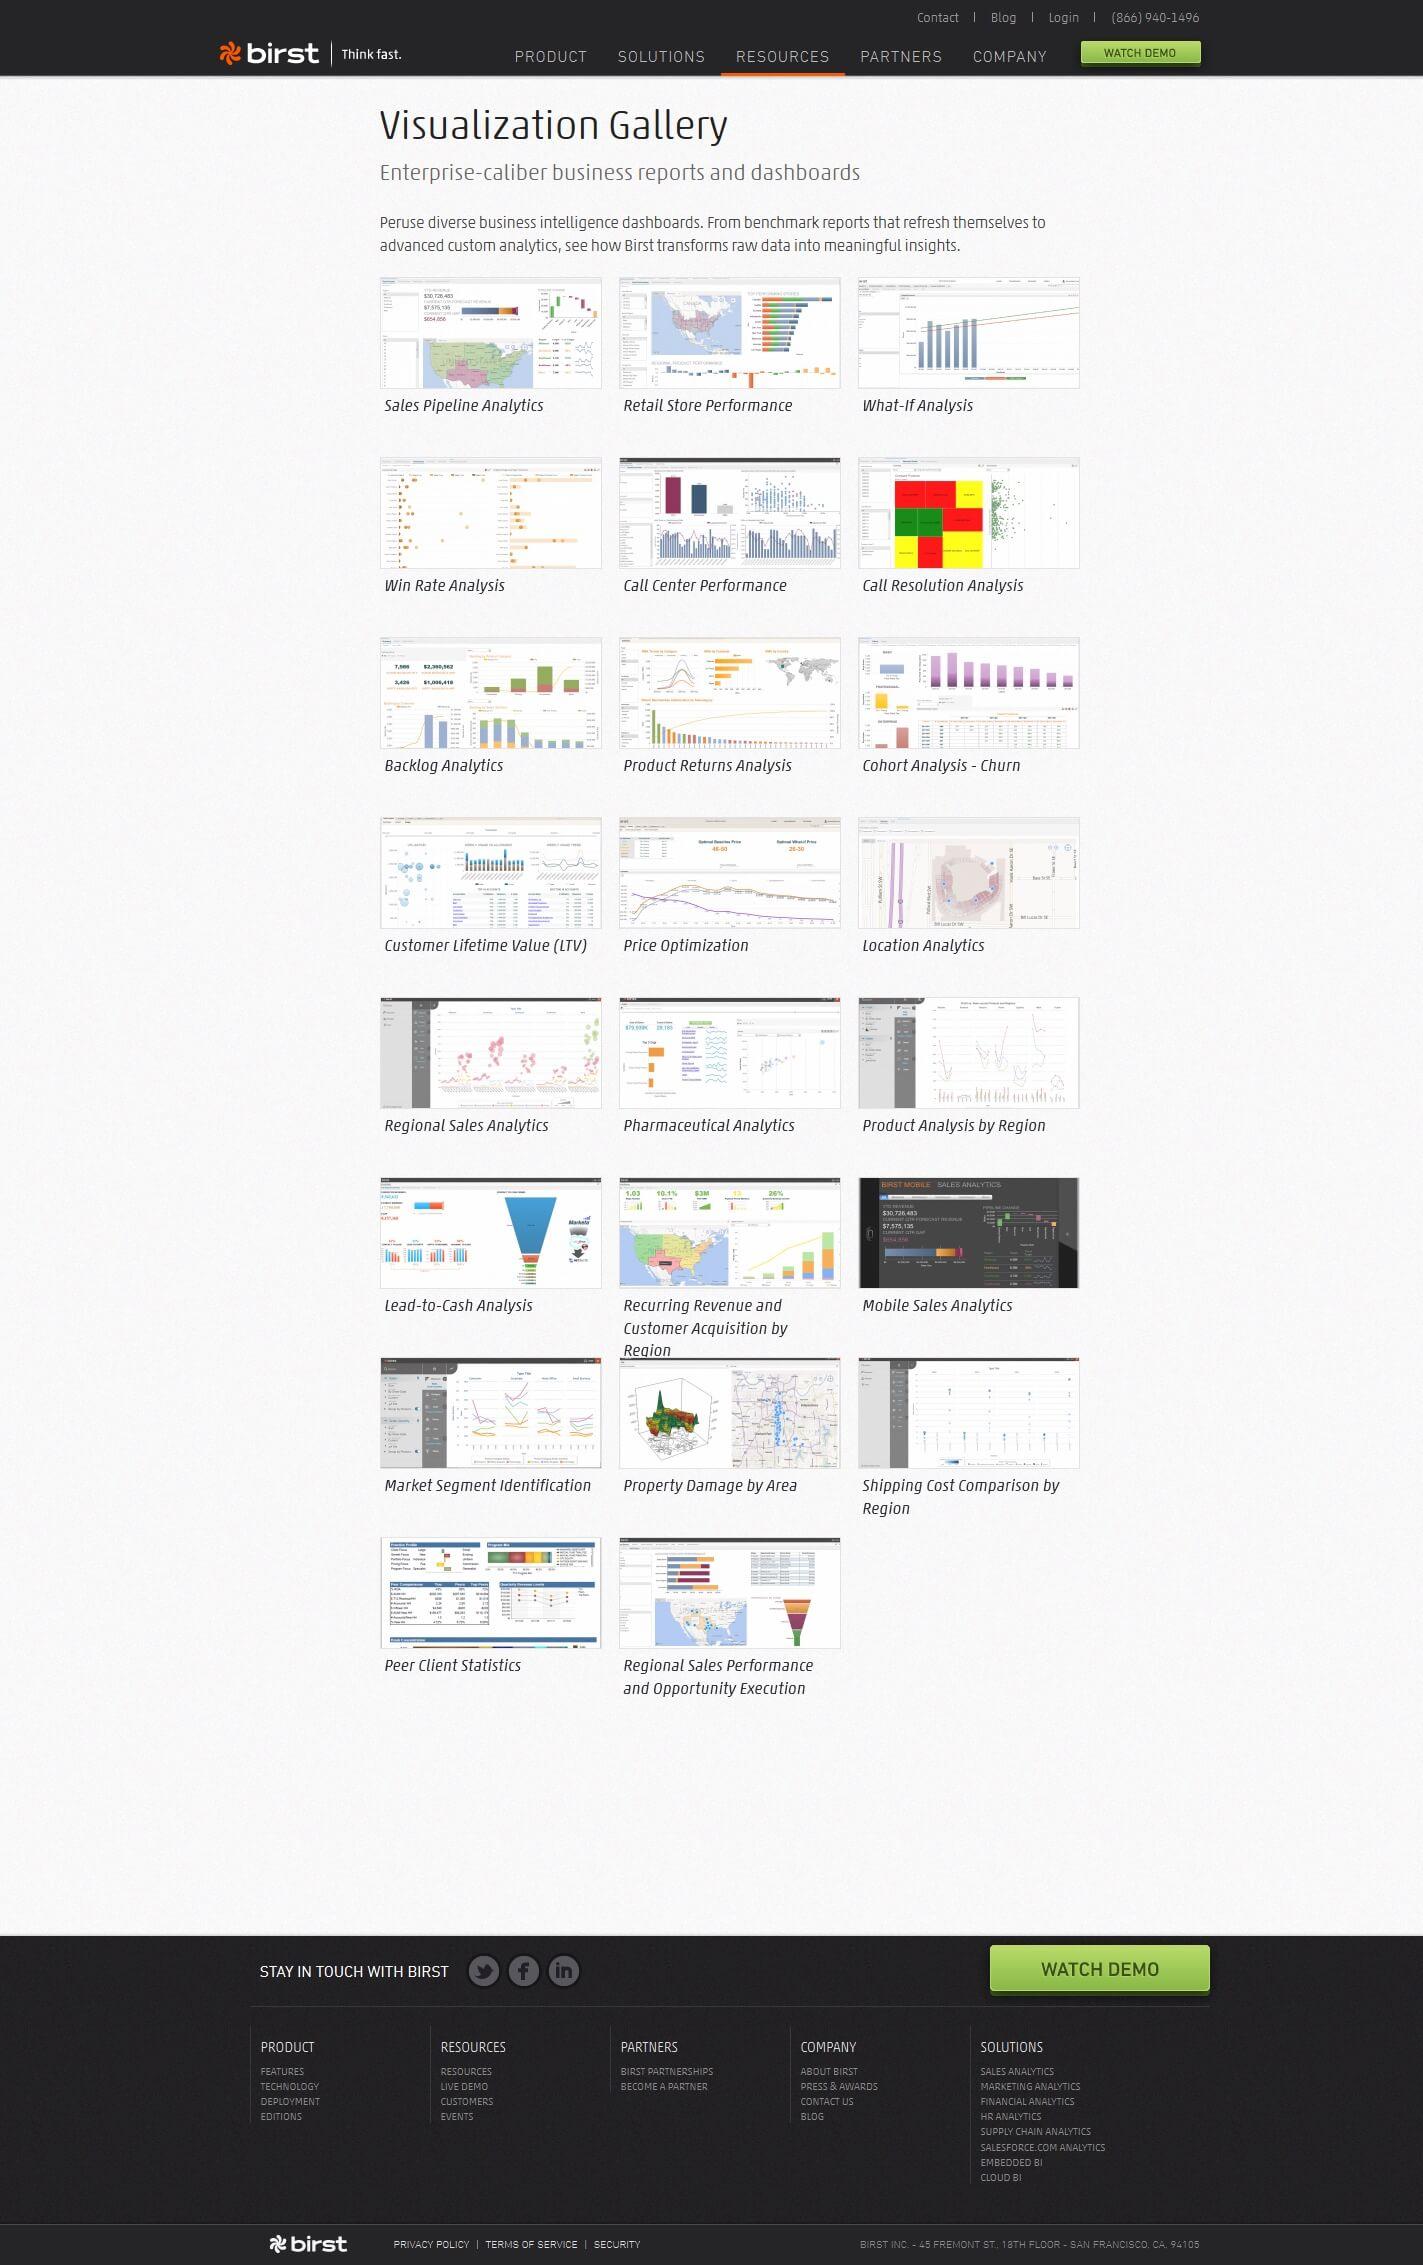 A desktop screenshot of the Birst visualization gallery